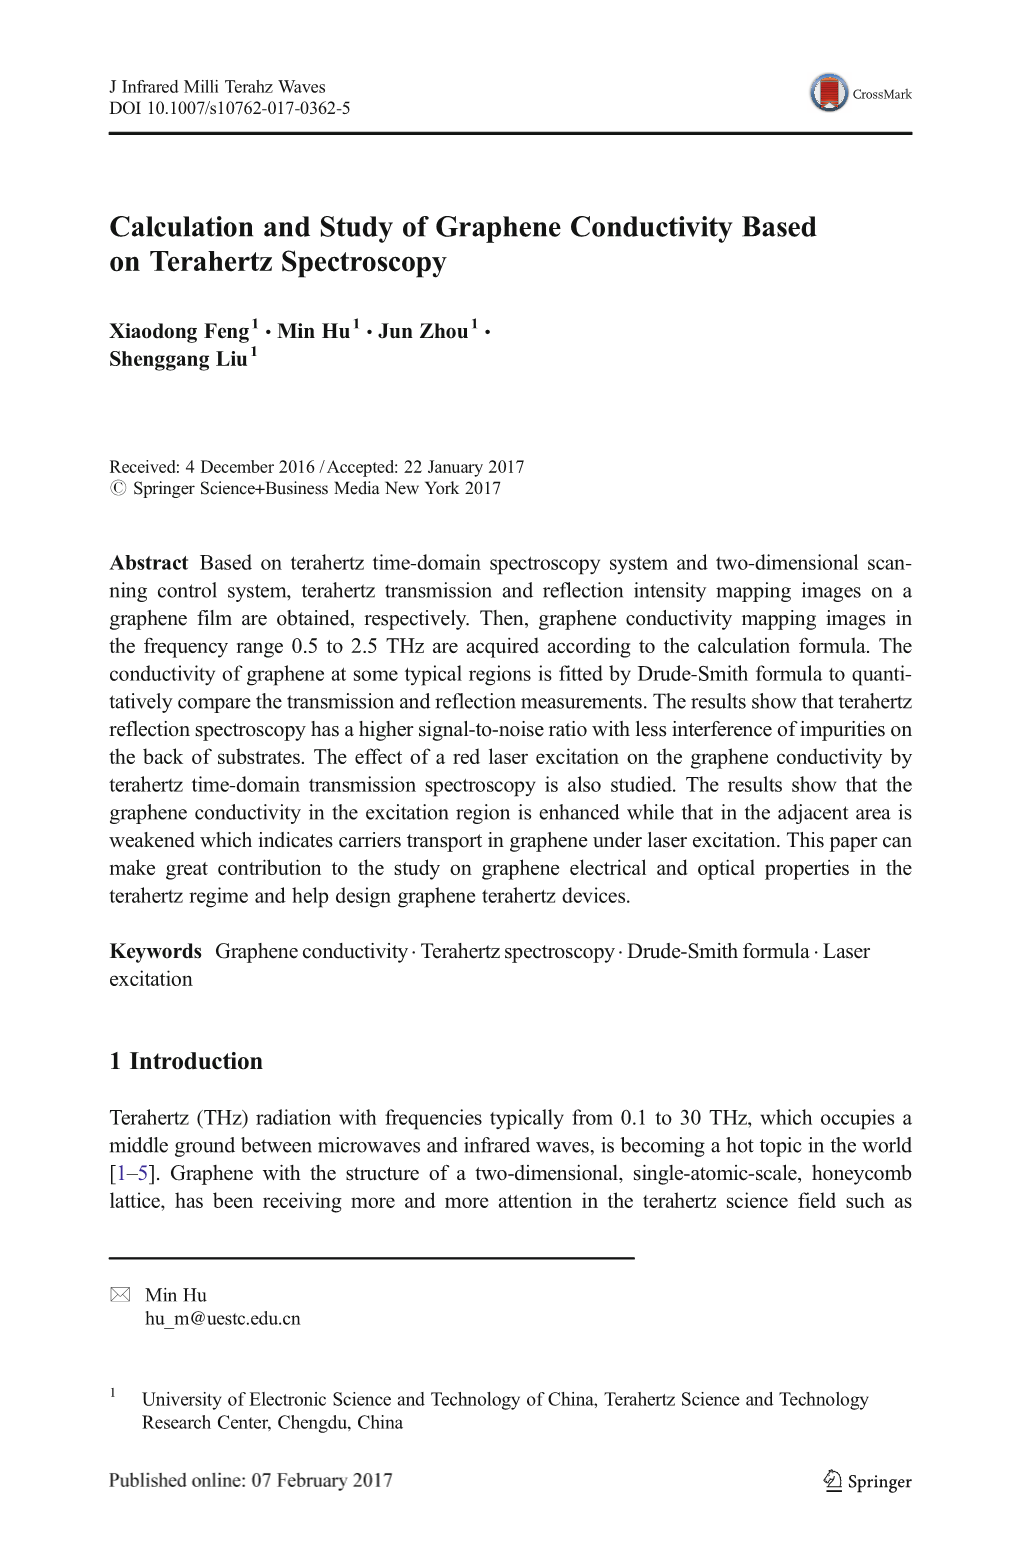 Calculation and Study of Graphene Conductivity Based on Terahertz Spectroscopy